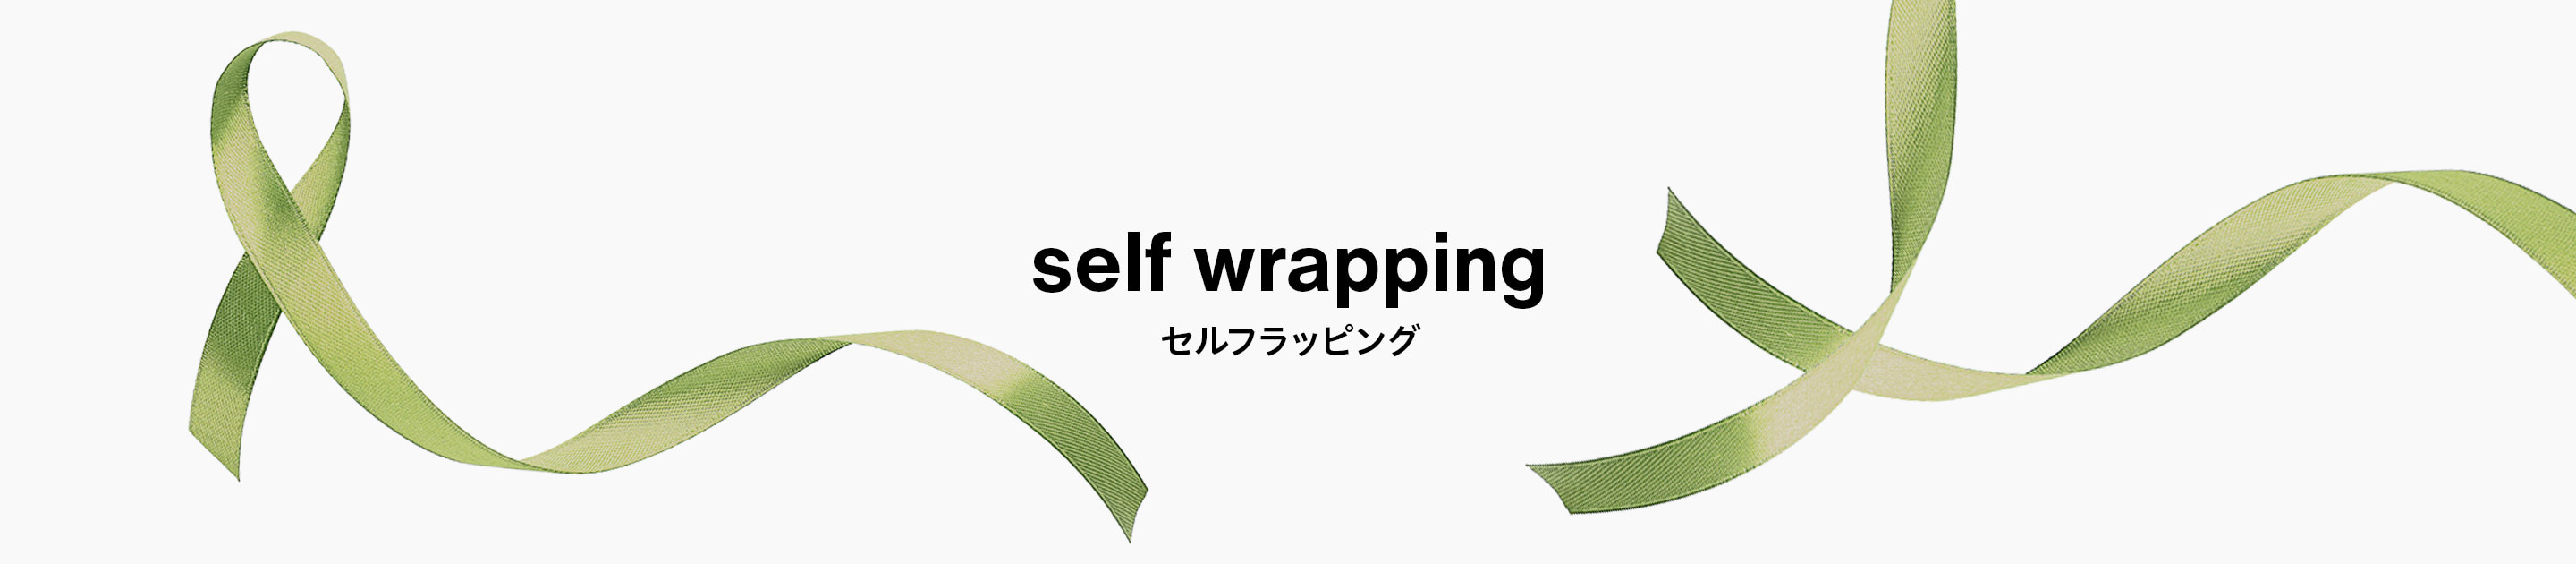 self wrapping セルフラッピング